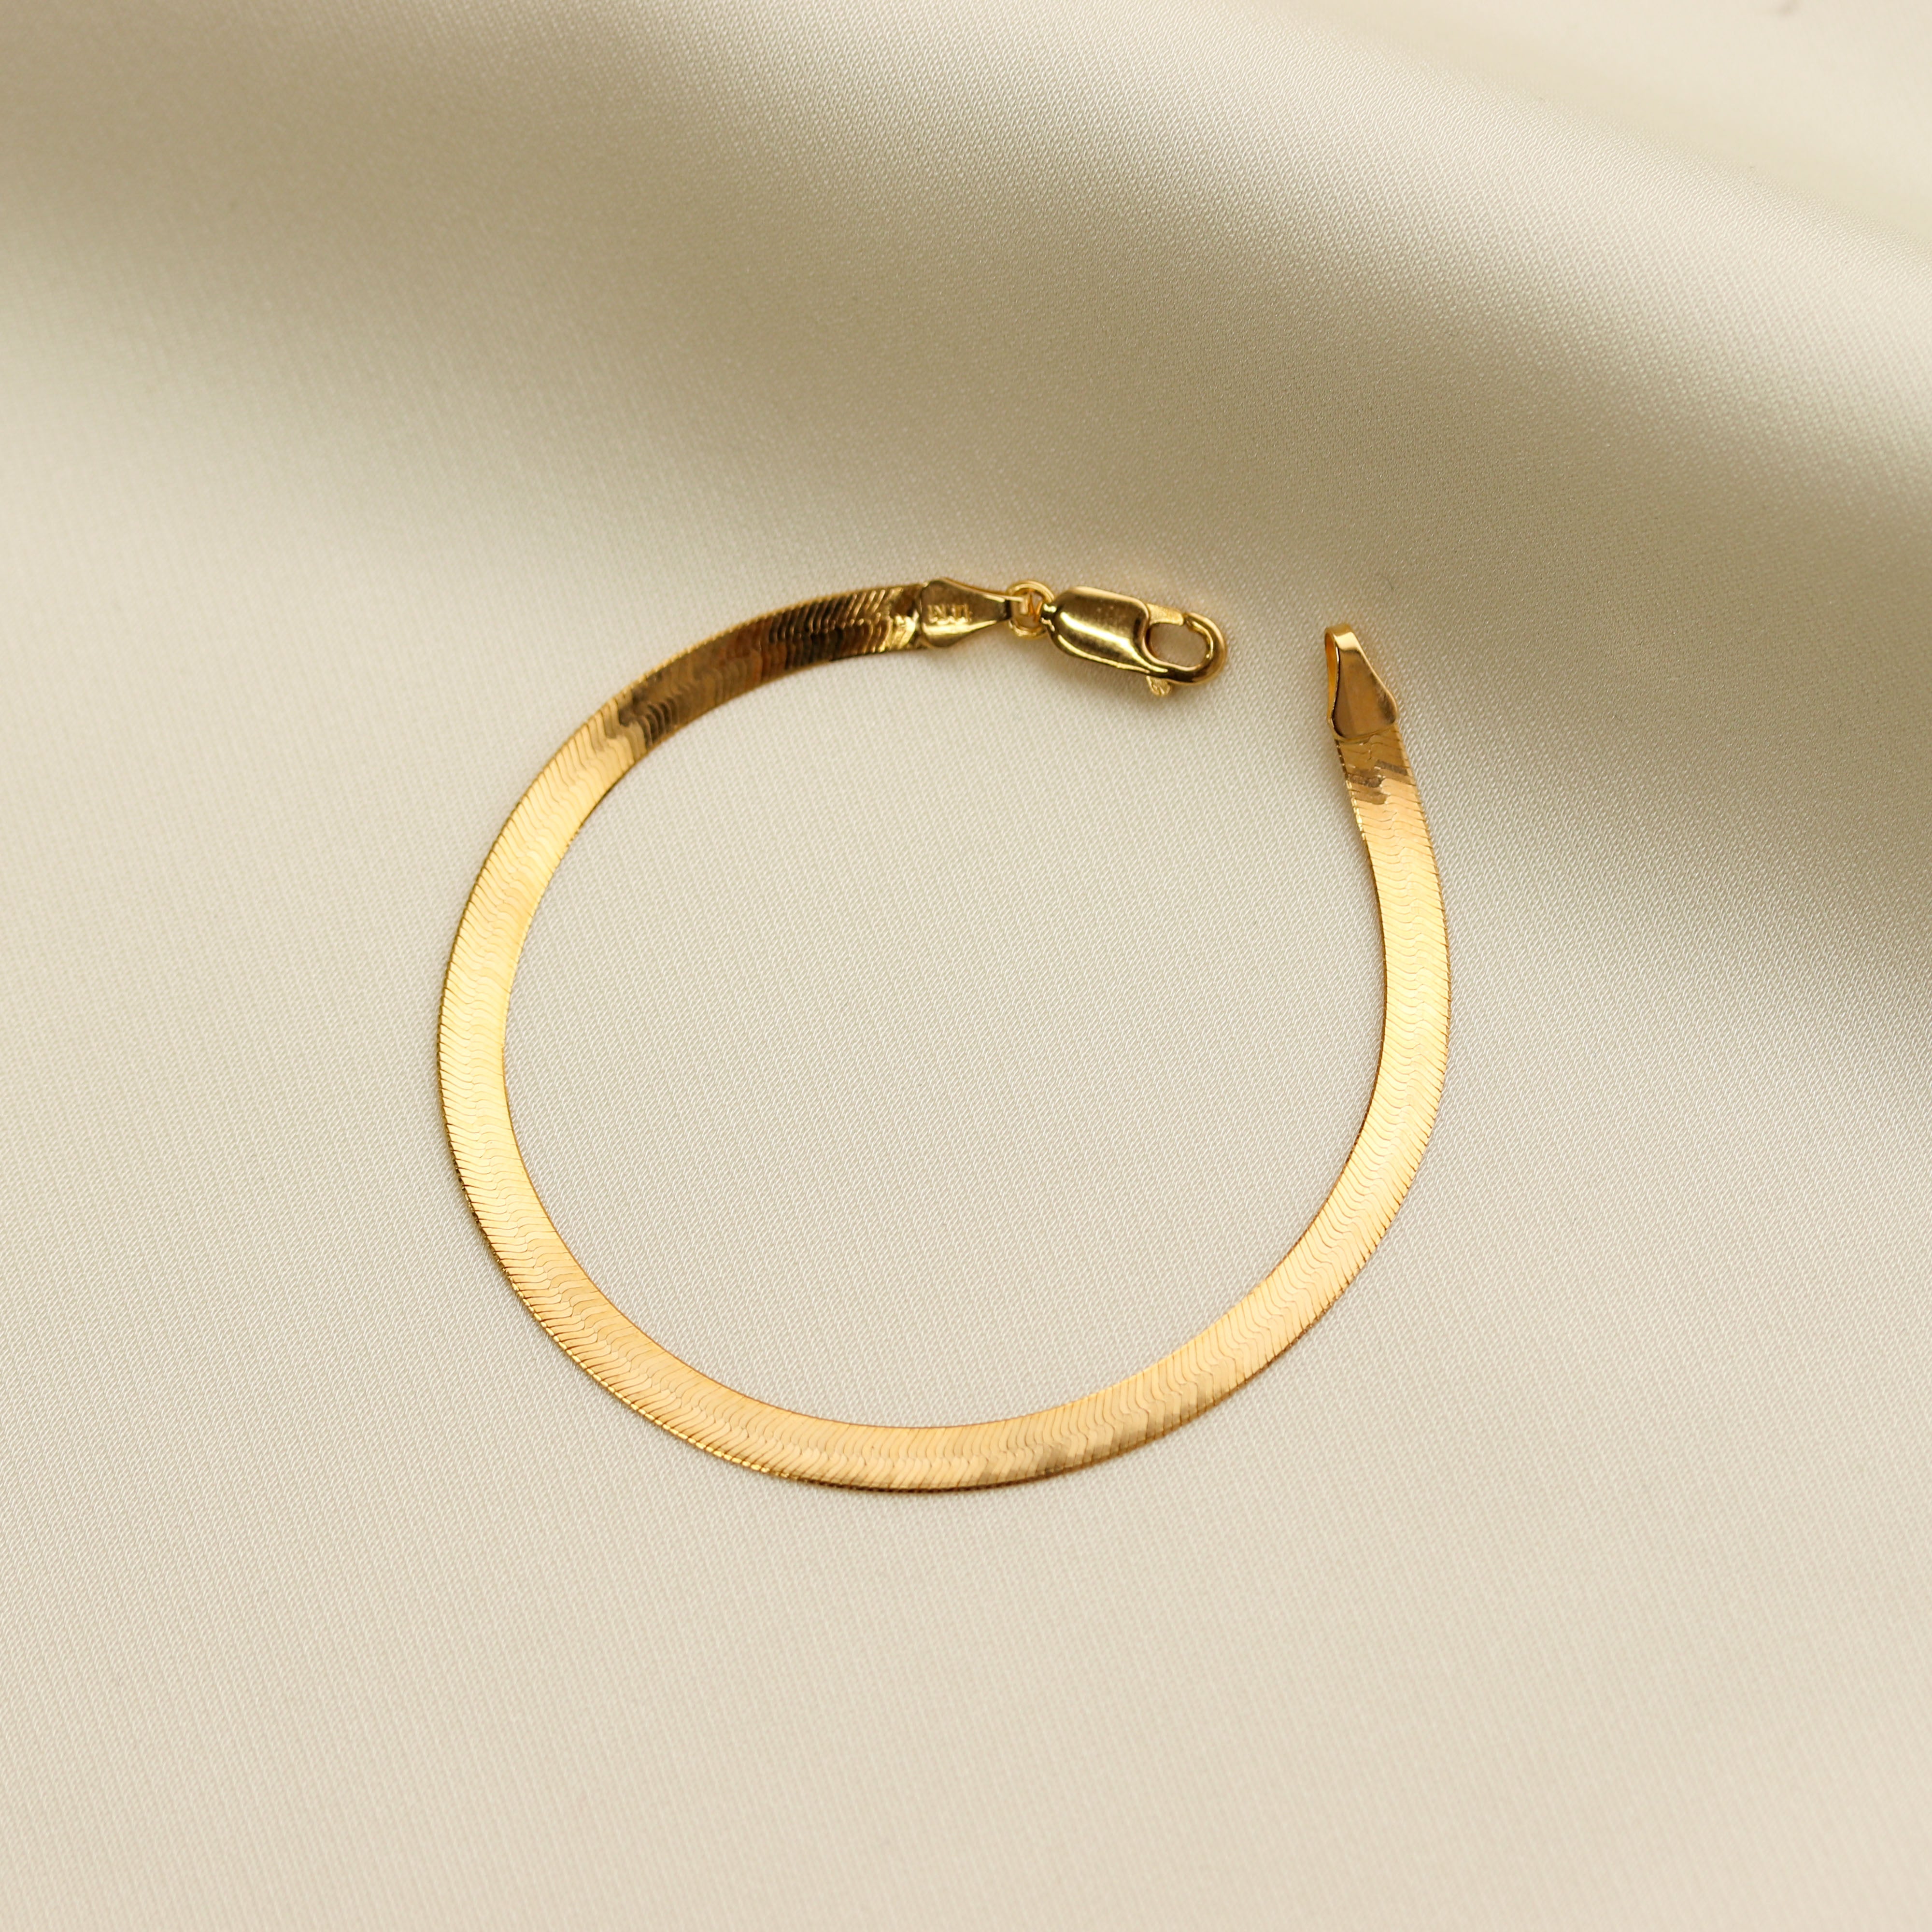 Ruby Gold Polish Hathphool Ring Bracelet For Brides